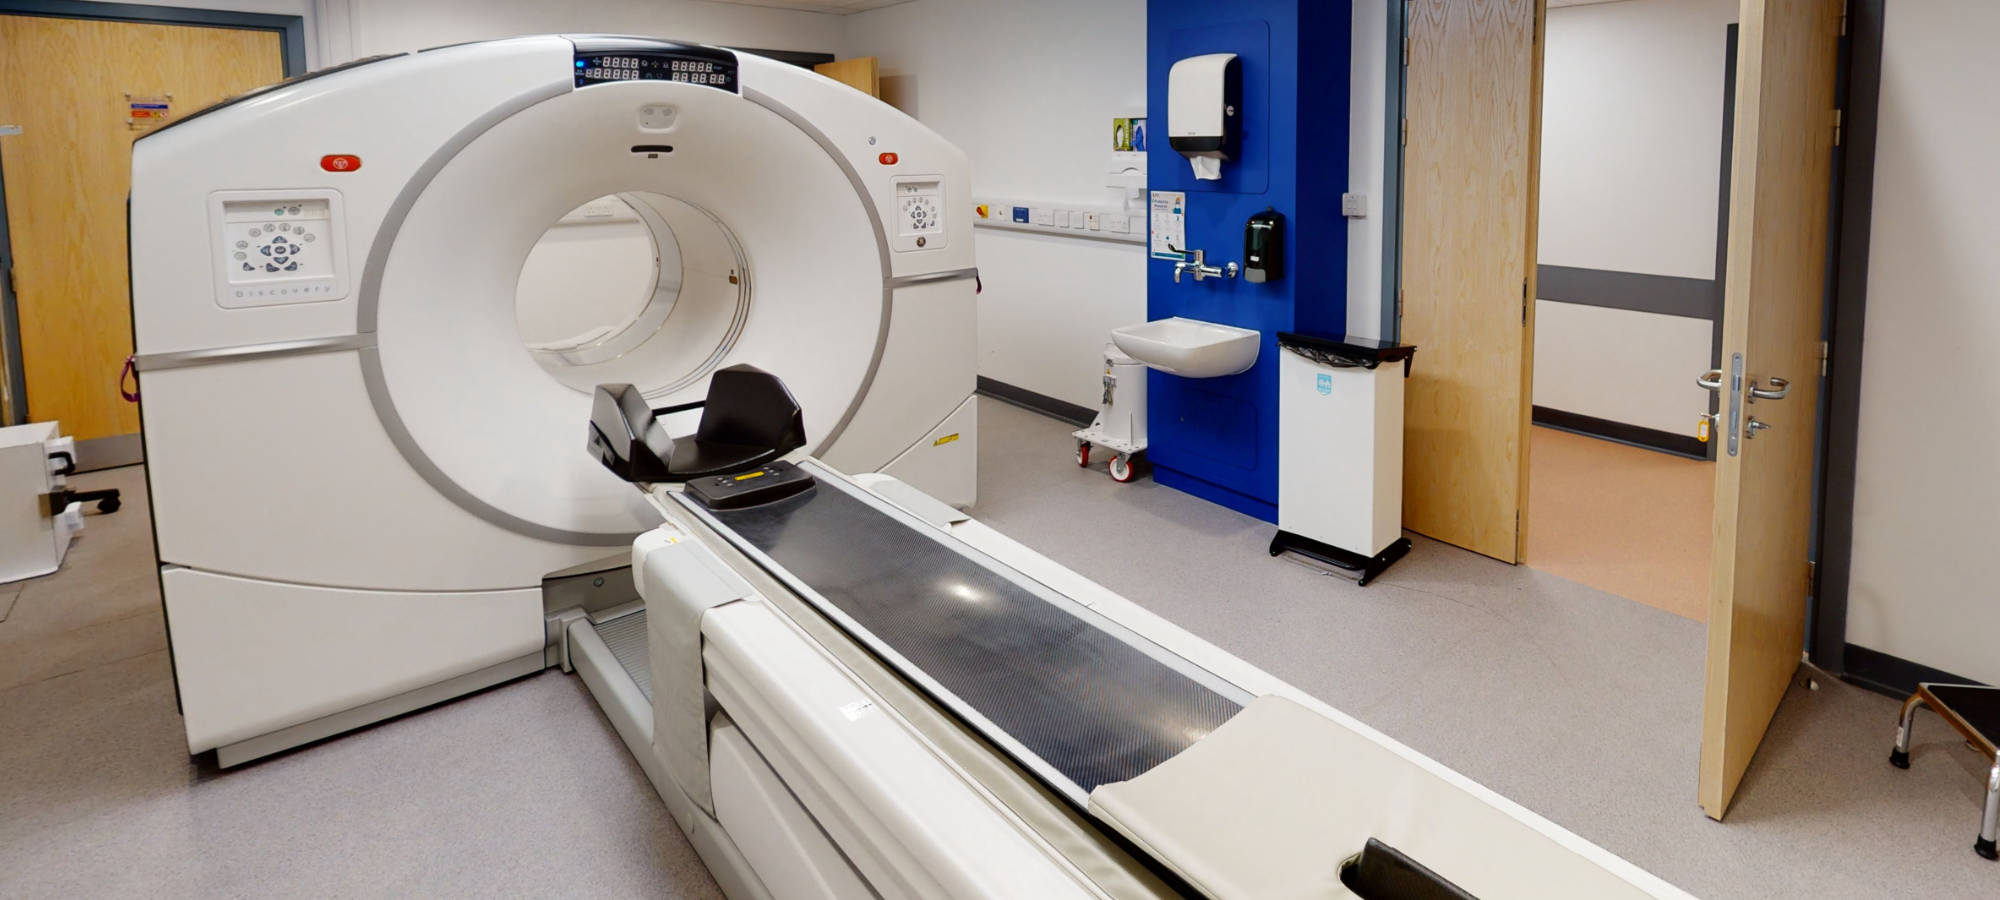 GE Digital PET CT scanner was installed by Imaging Matters